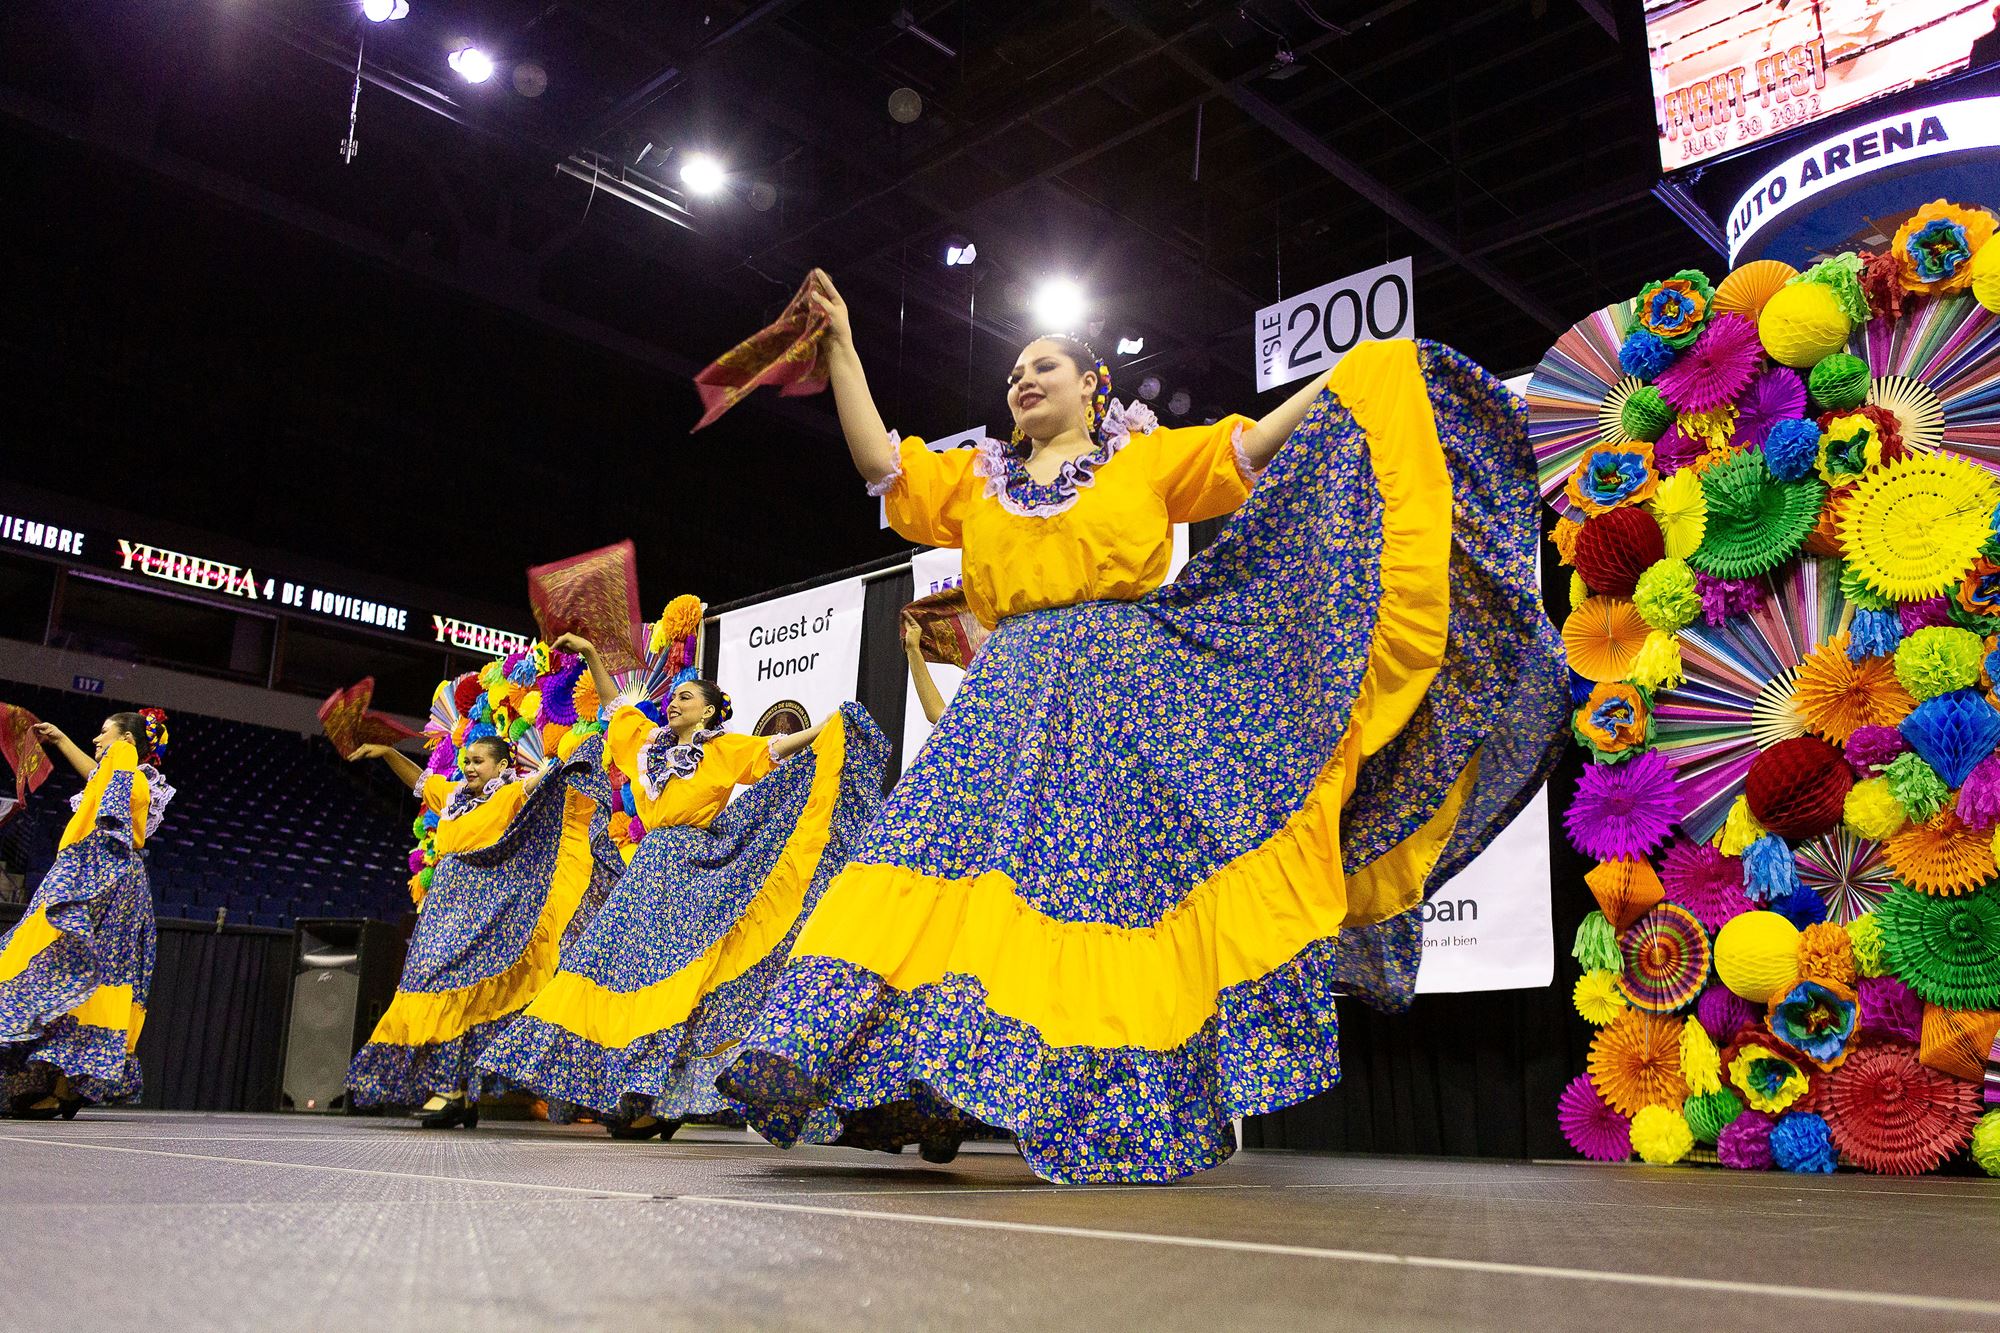 Laredo International Sister Cities Festival